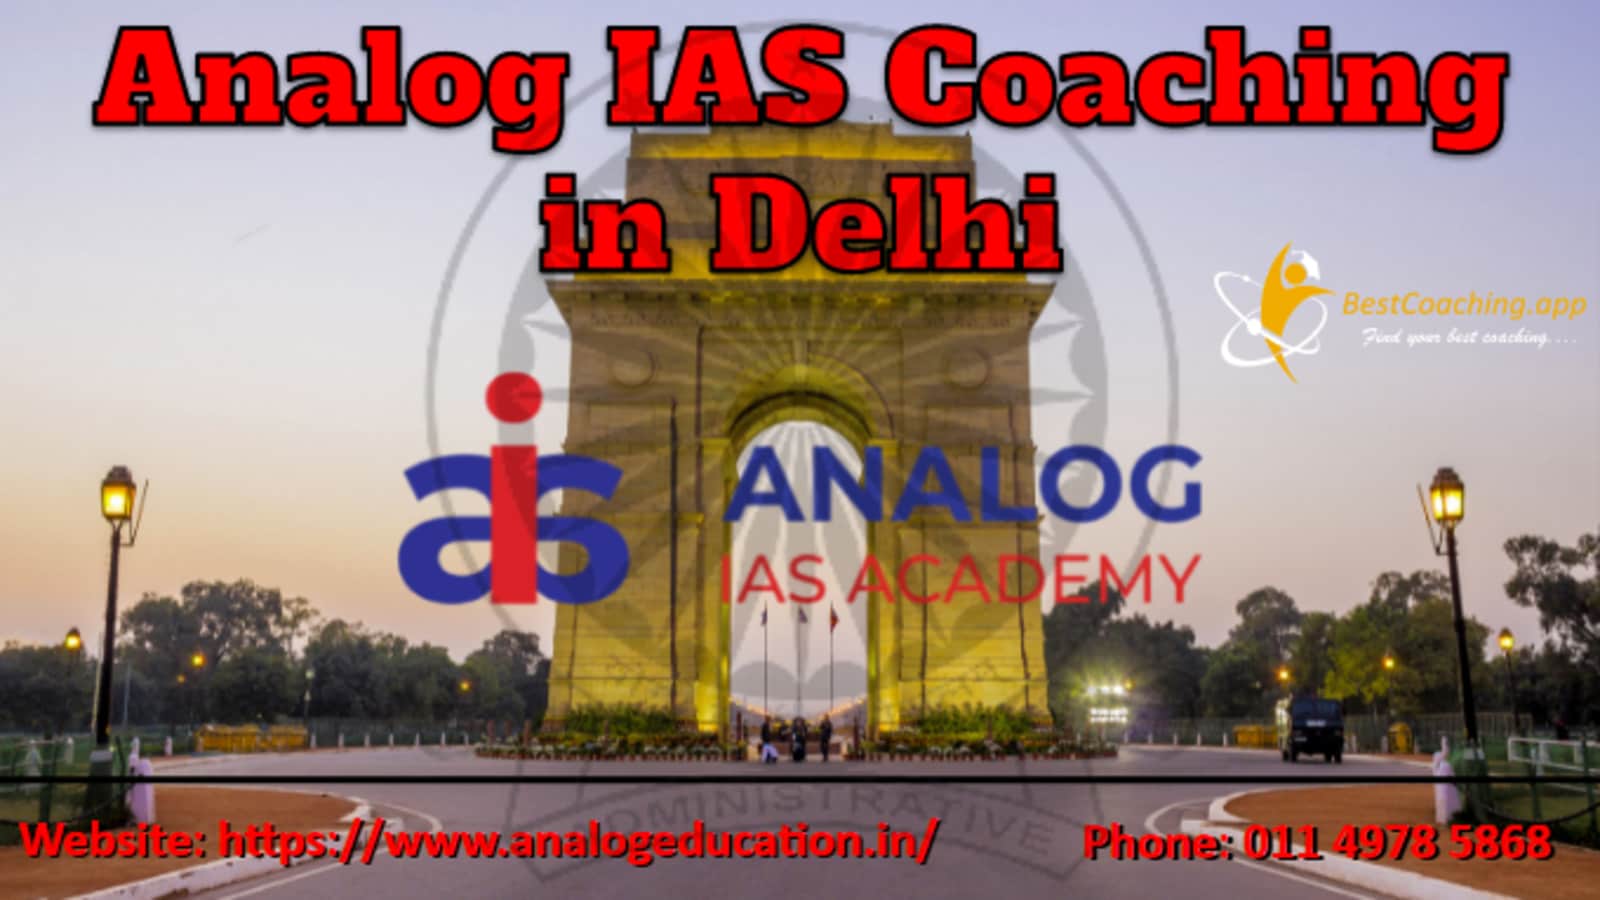 ANALOG IAS Coaching in Delhi